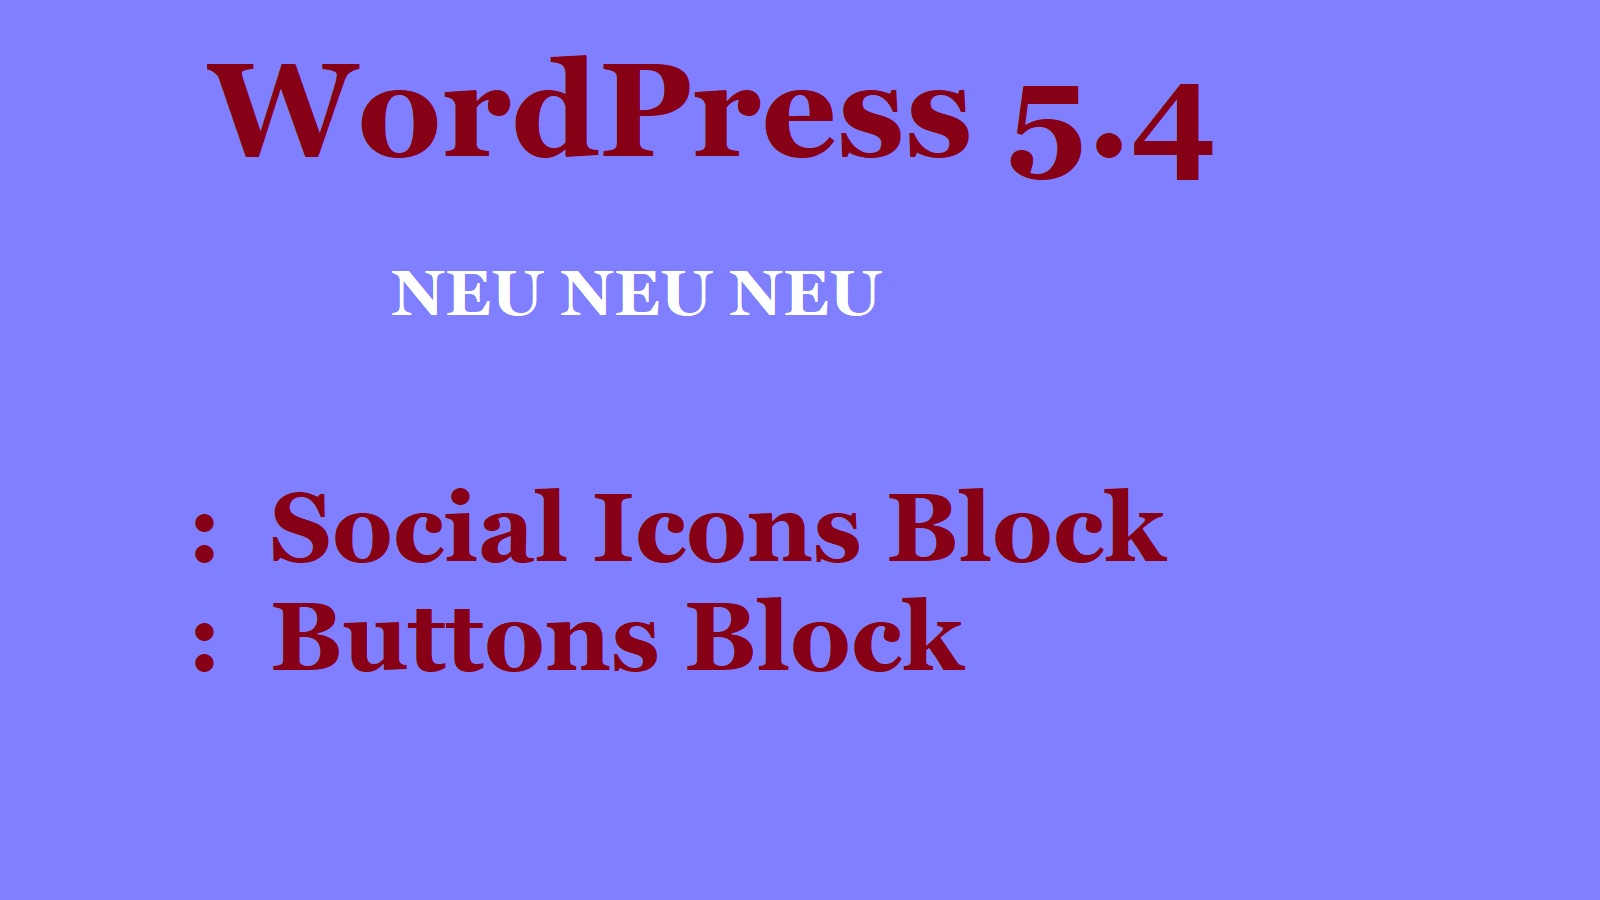 WordPress 5.4 – Social Icons Block und Buttons Block – NEU genau erklärt